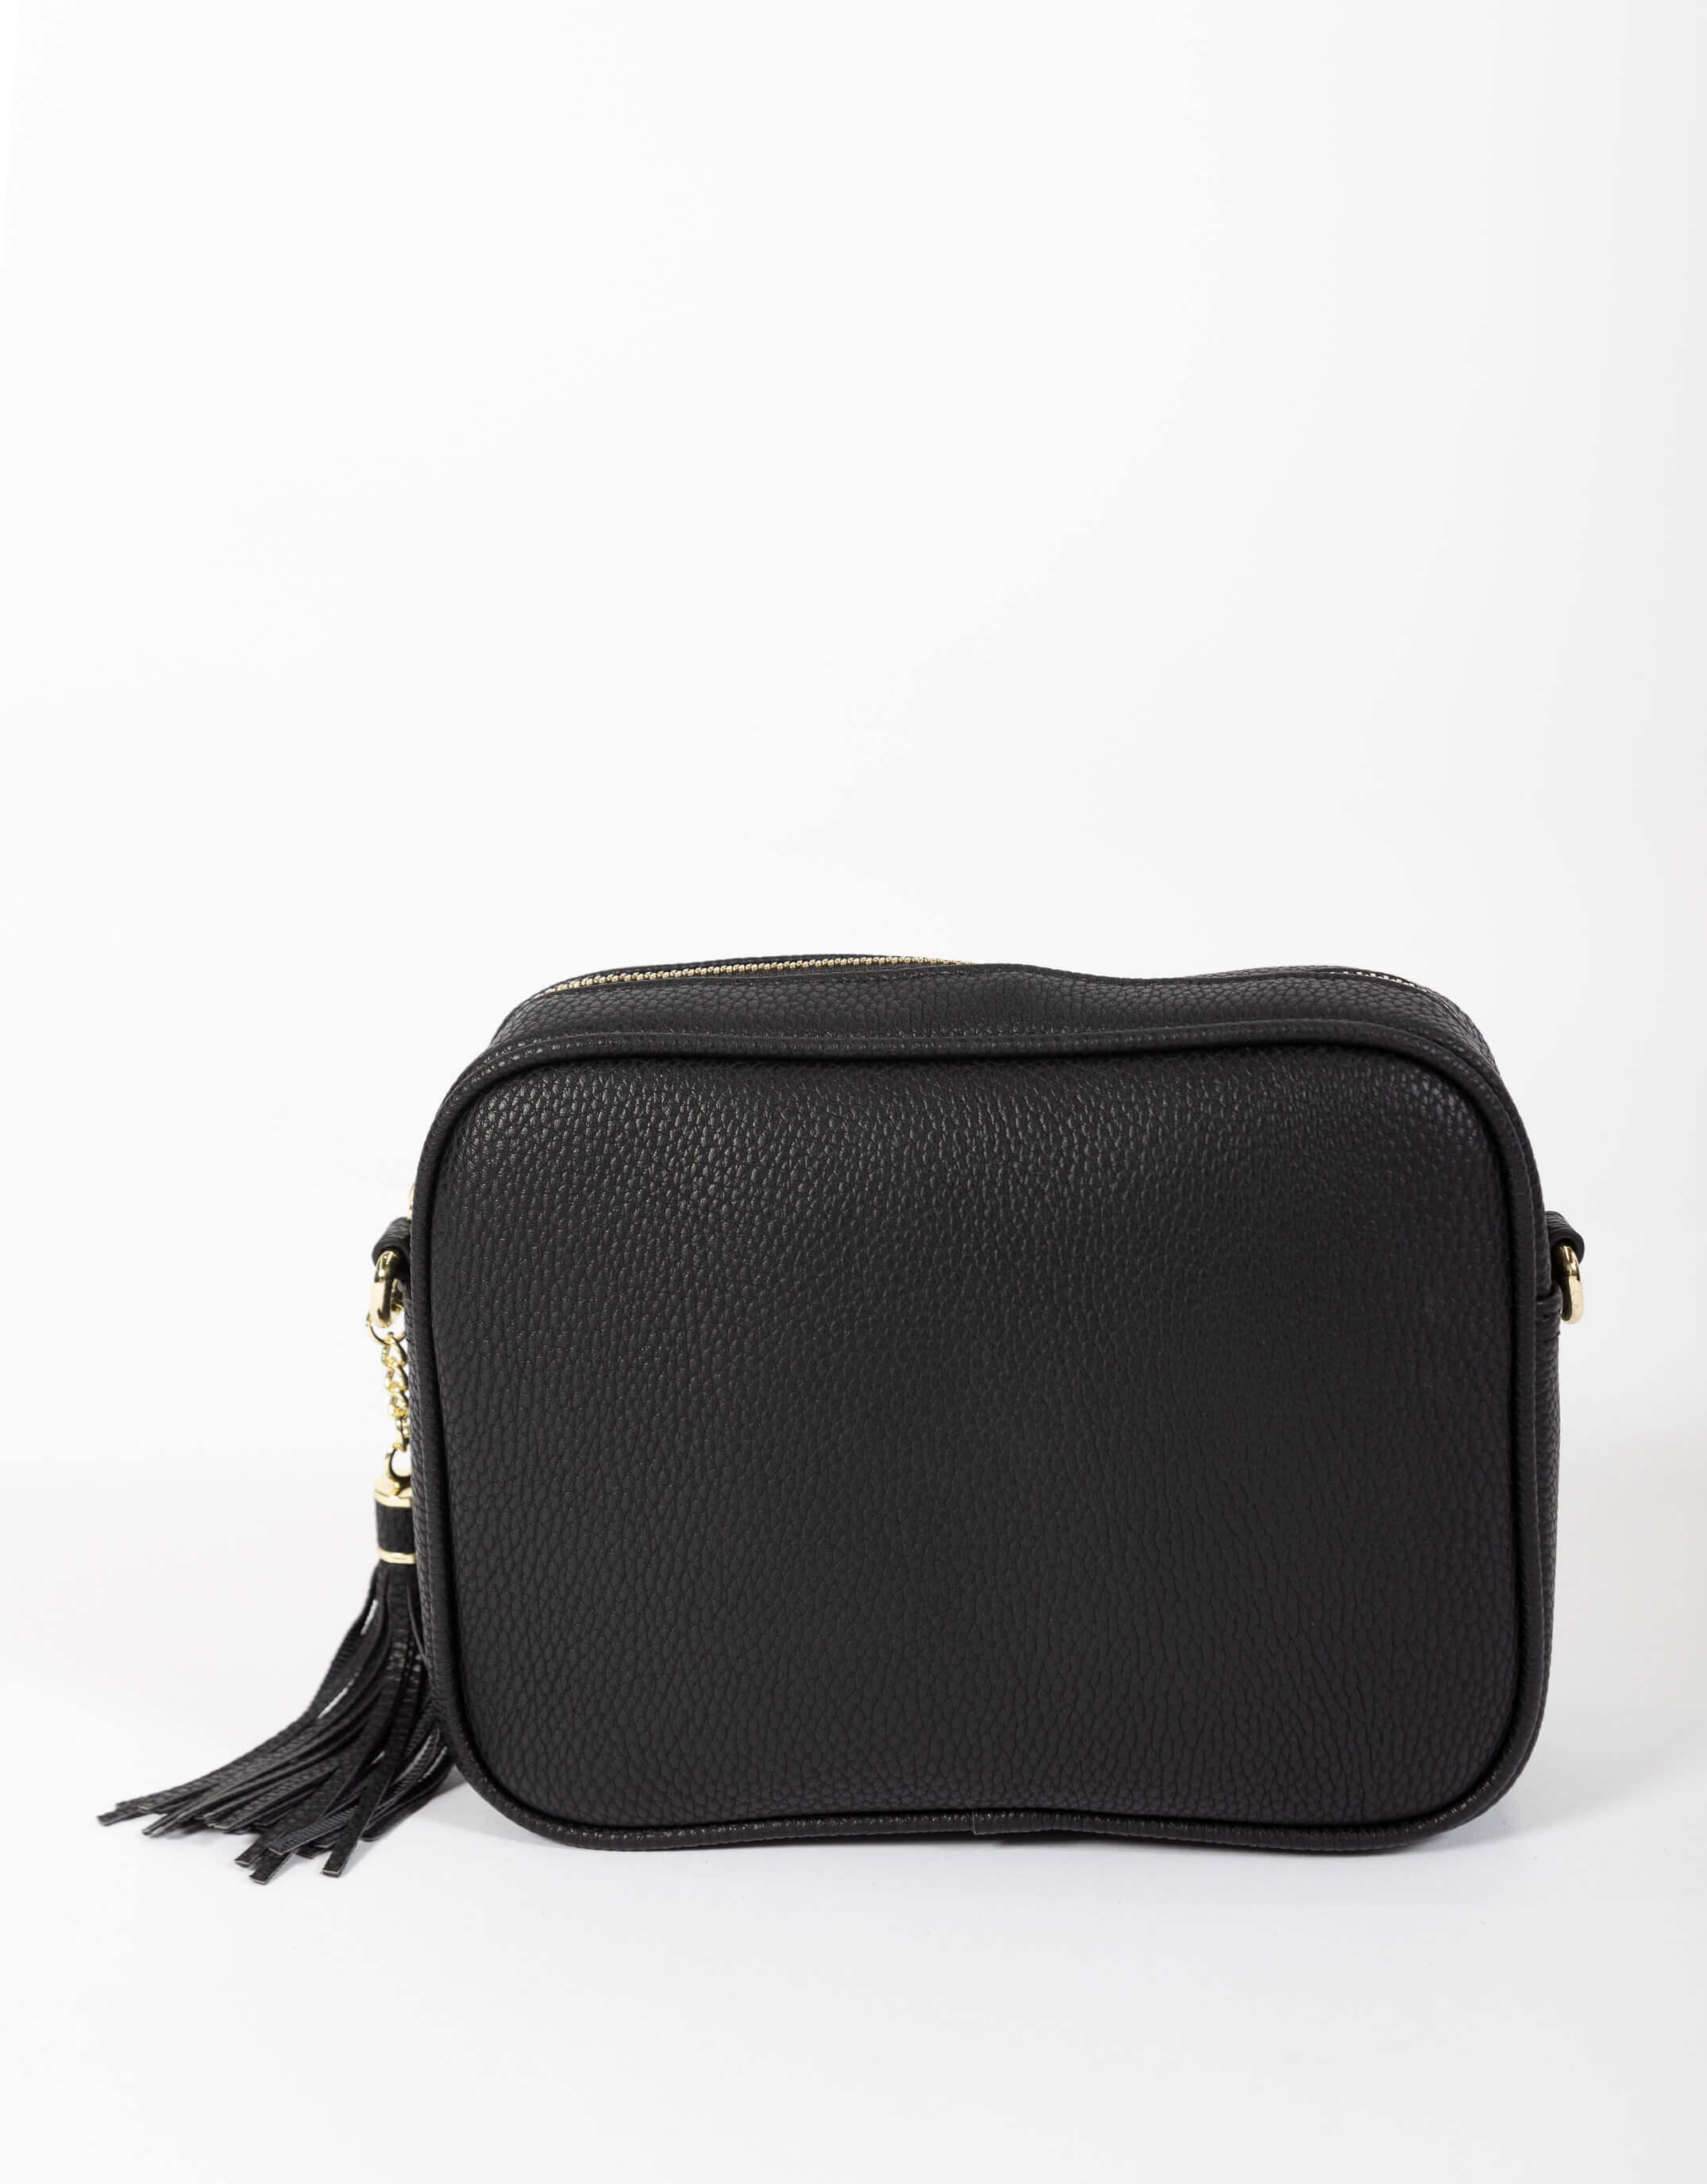 White & Co. - Zoe Crossbody Bag - Black/ Lurex Stripe - White & Co Living Accessories